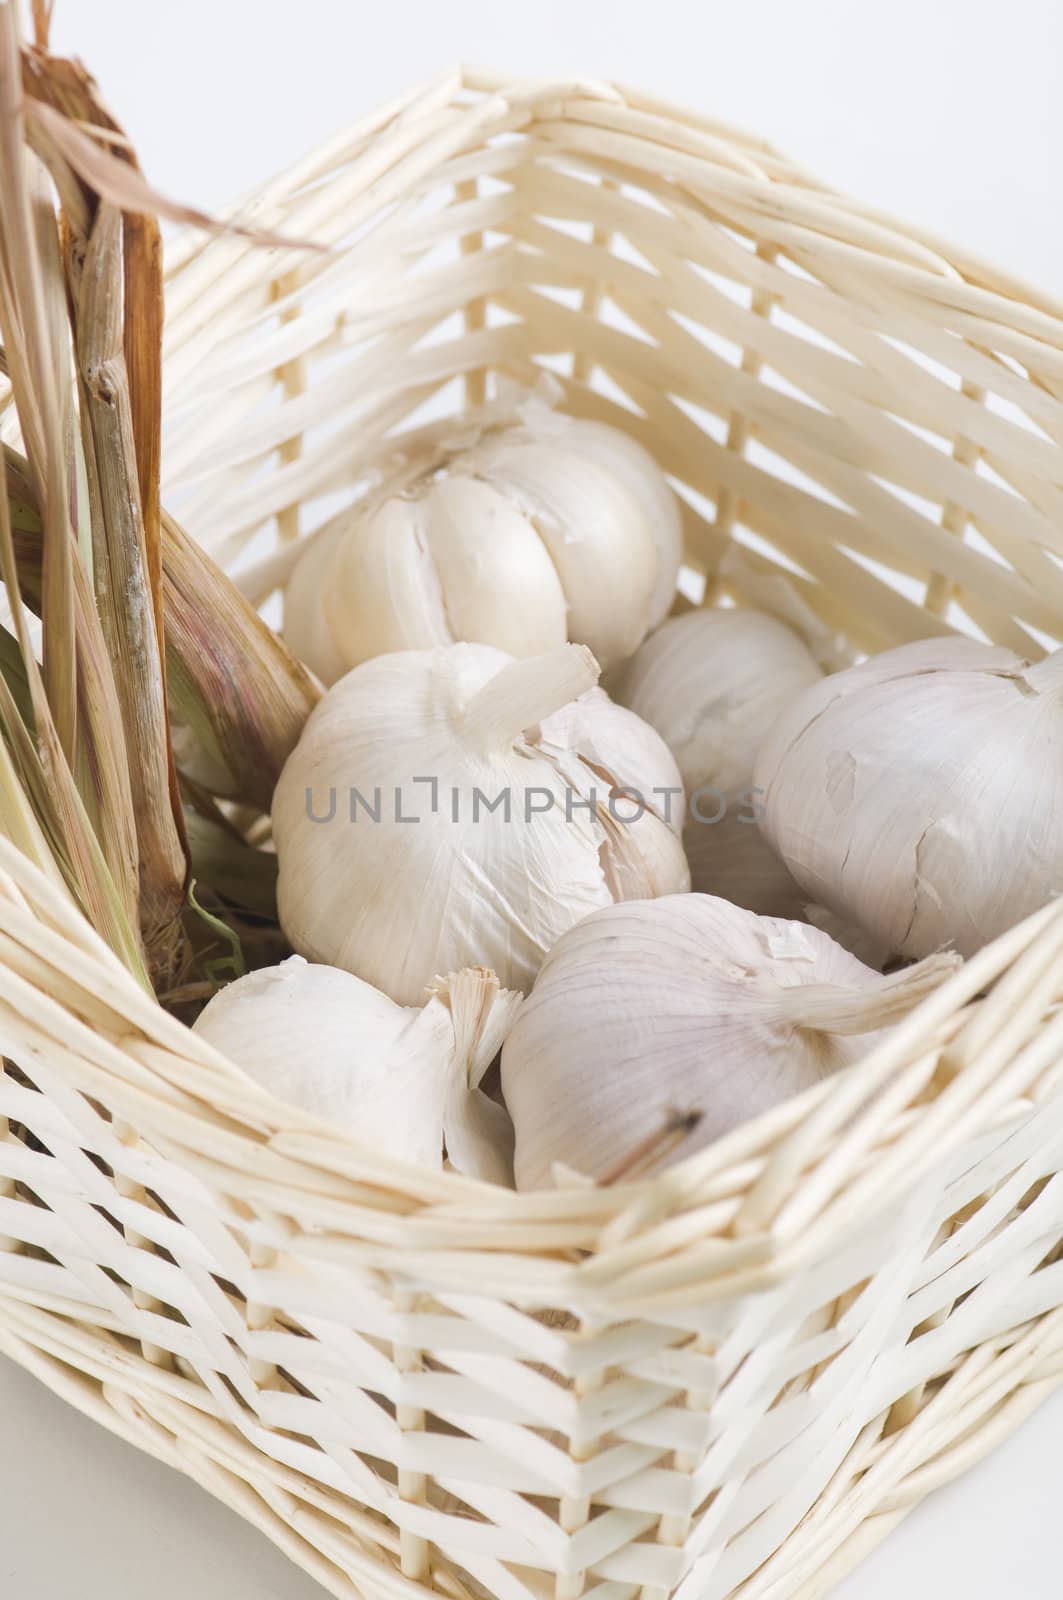 garlic with dried lemon grass inside a rattan basket by yuliang11